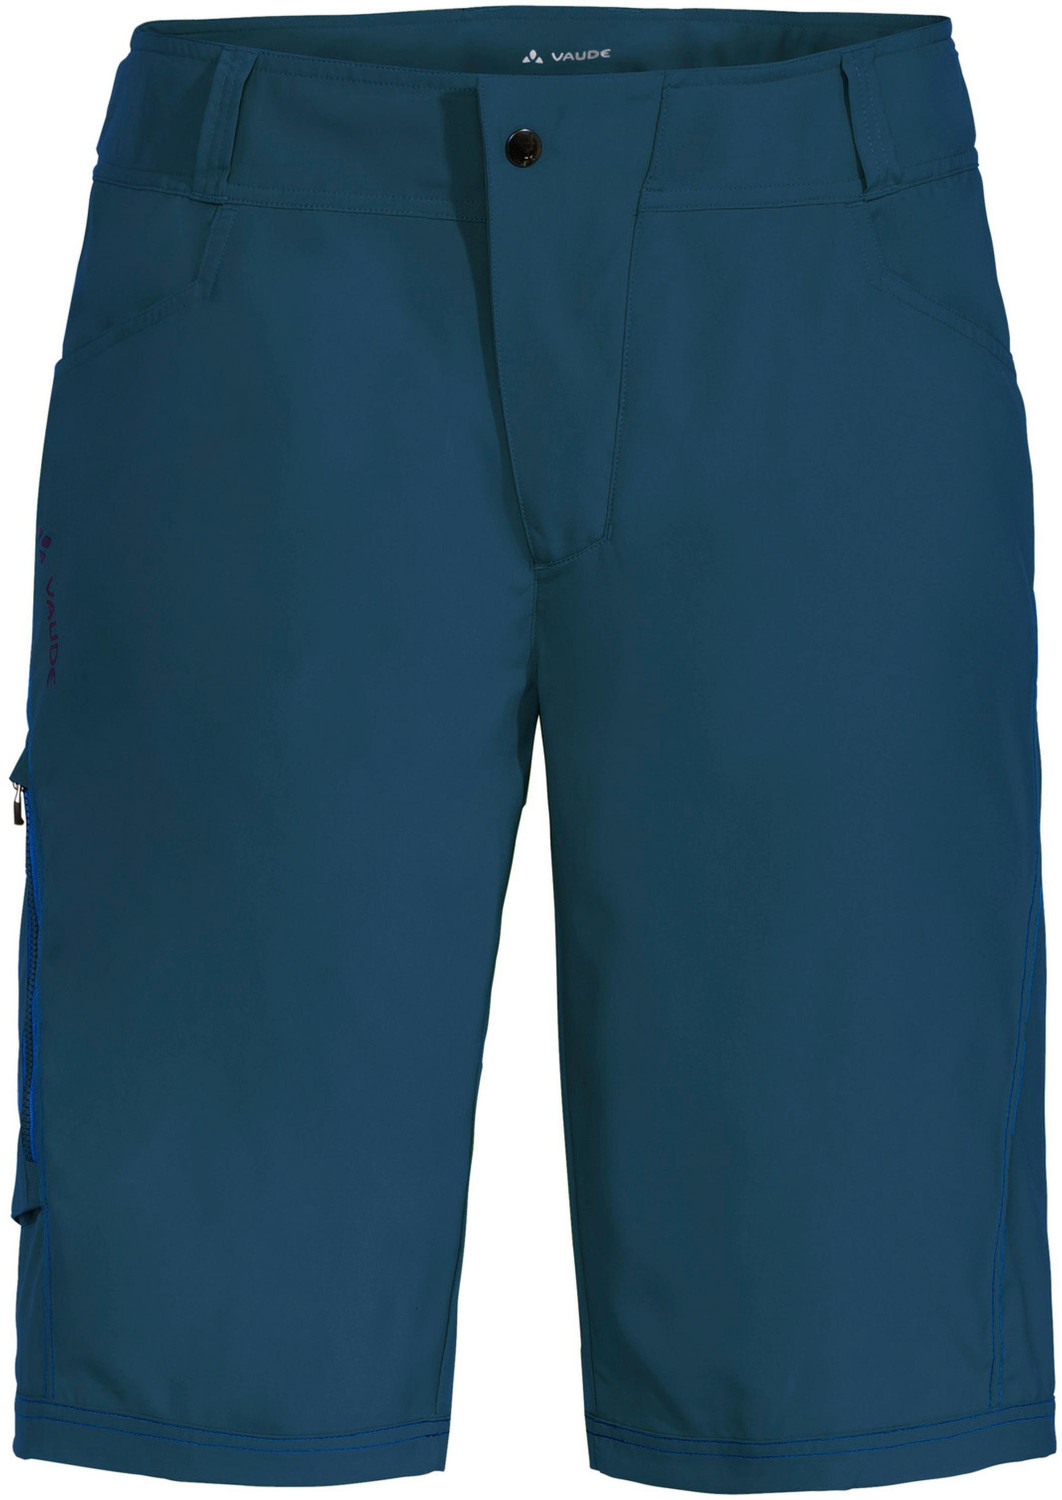 VAUDE Men's Ledro Shorts ab 42,99 € | Preisvergleich bei